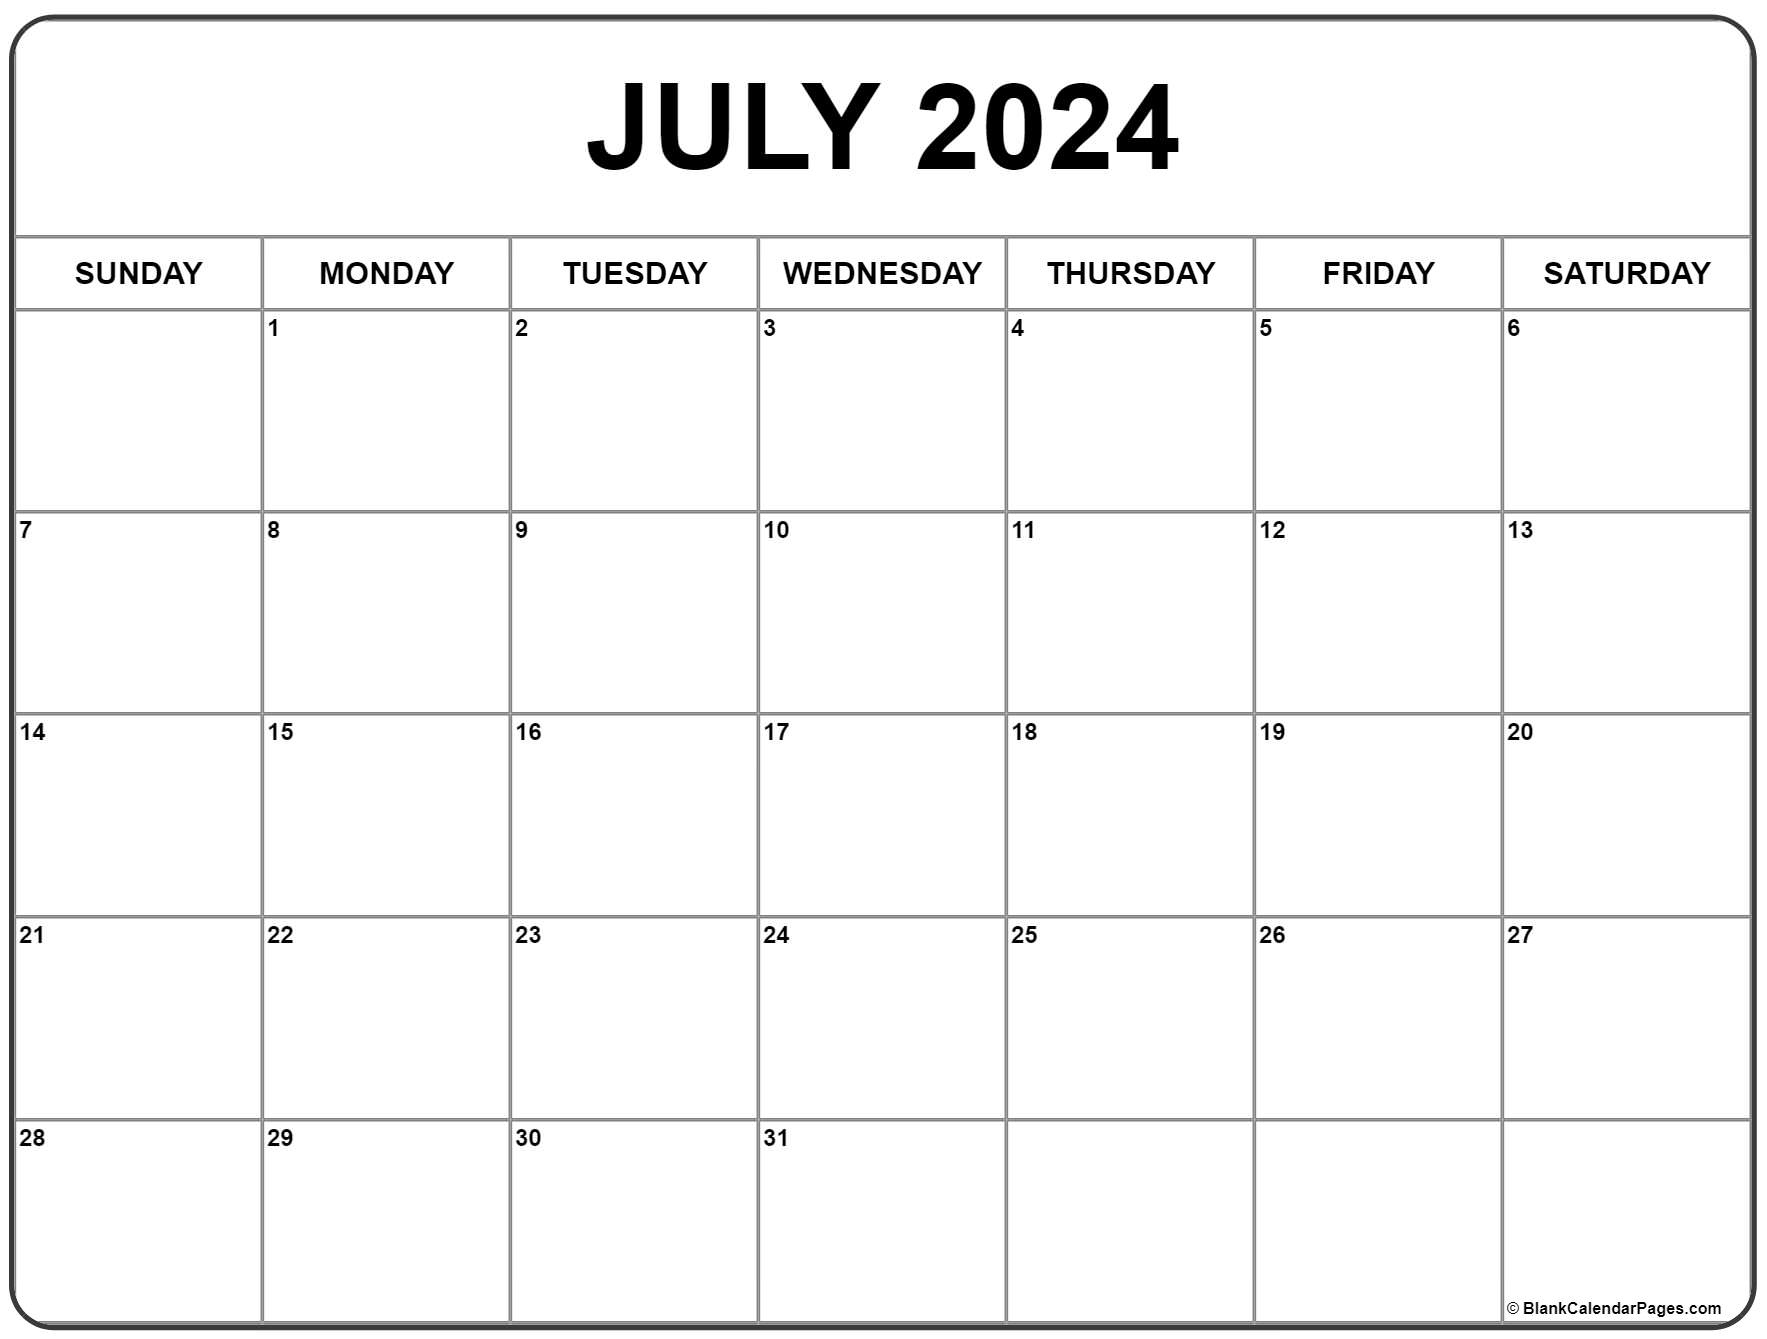 July 2024 Calendar | Free Printable Calendar | Blank Printable Calendar July 2024